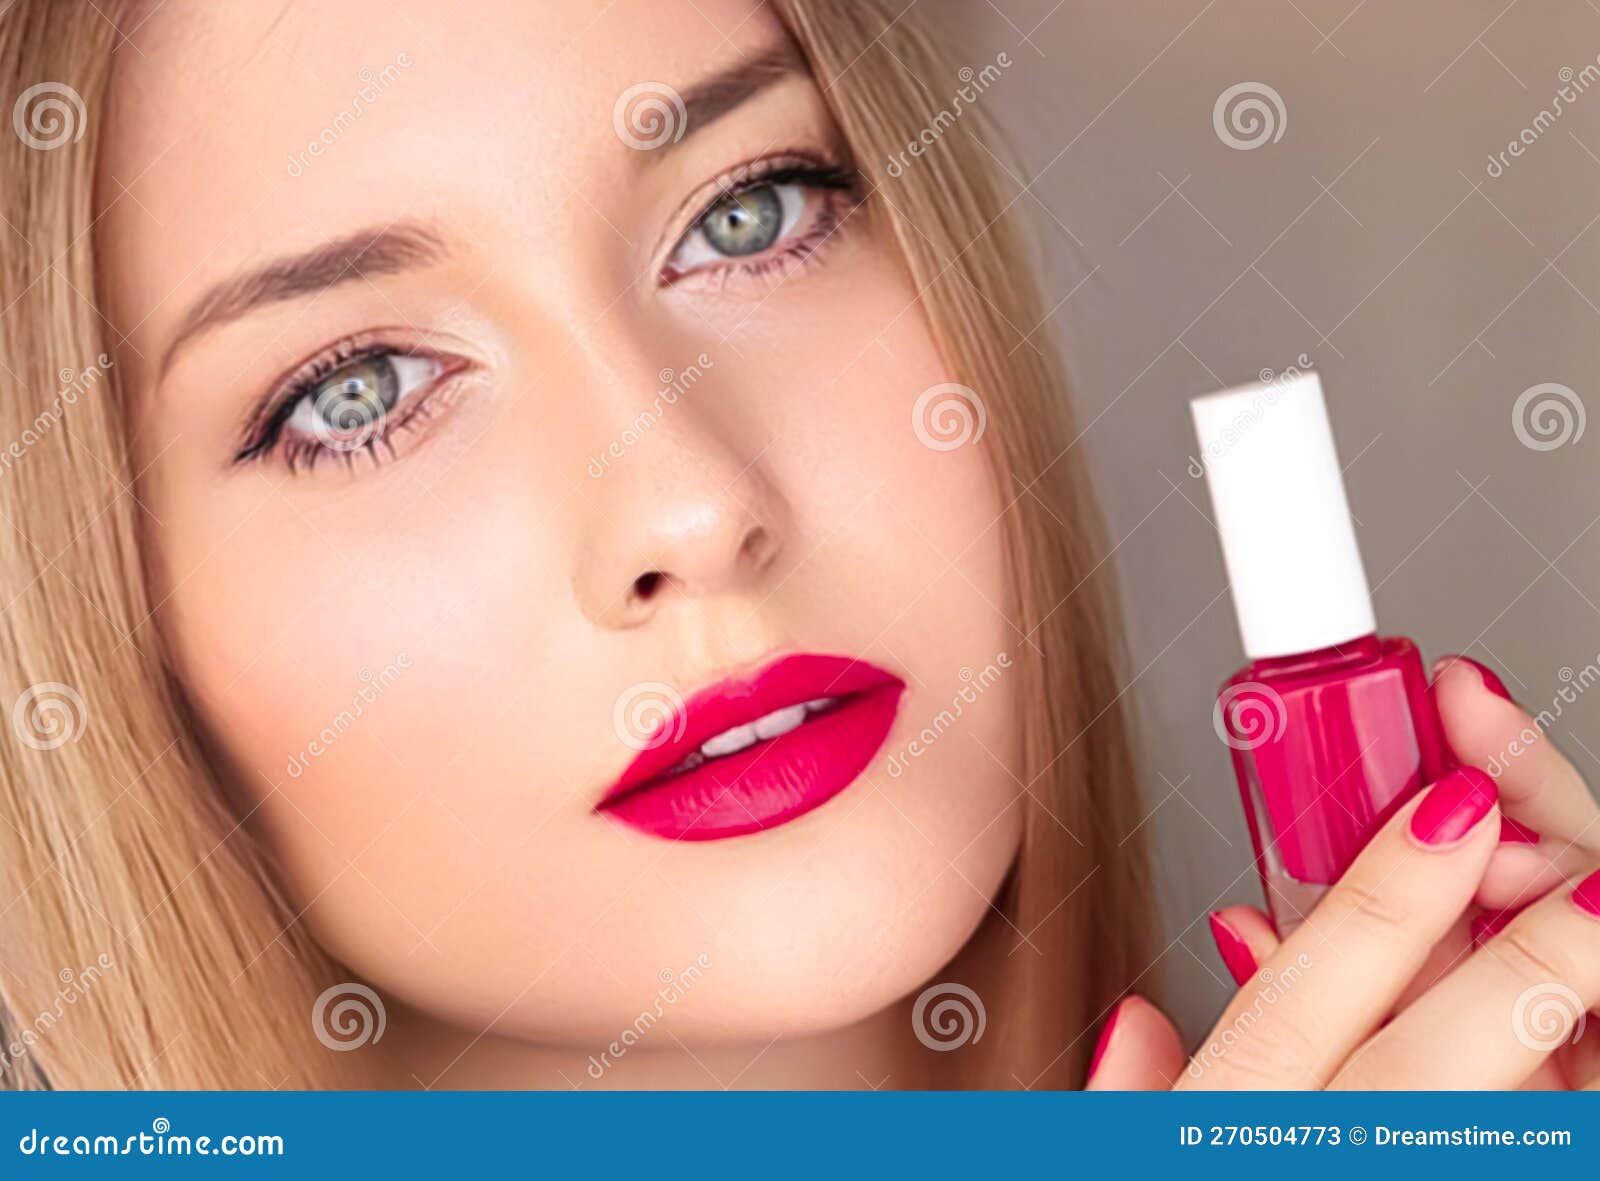 30 Matching Lipstick And Nail Polish Ideas - Nail Designs Journal